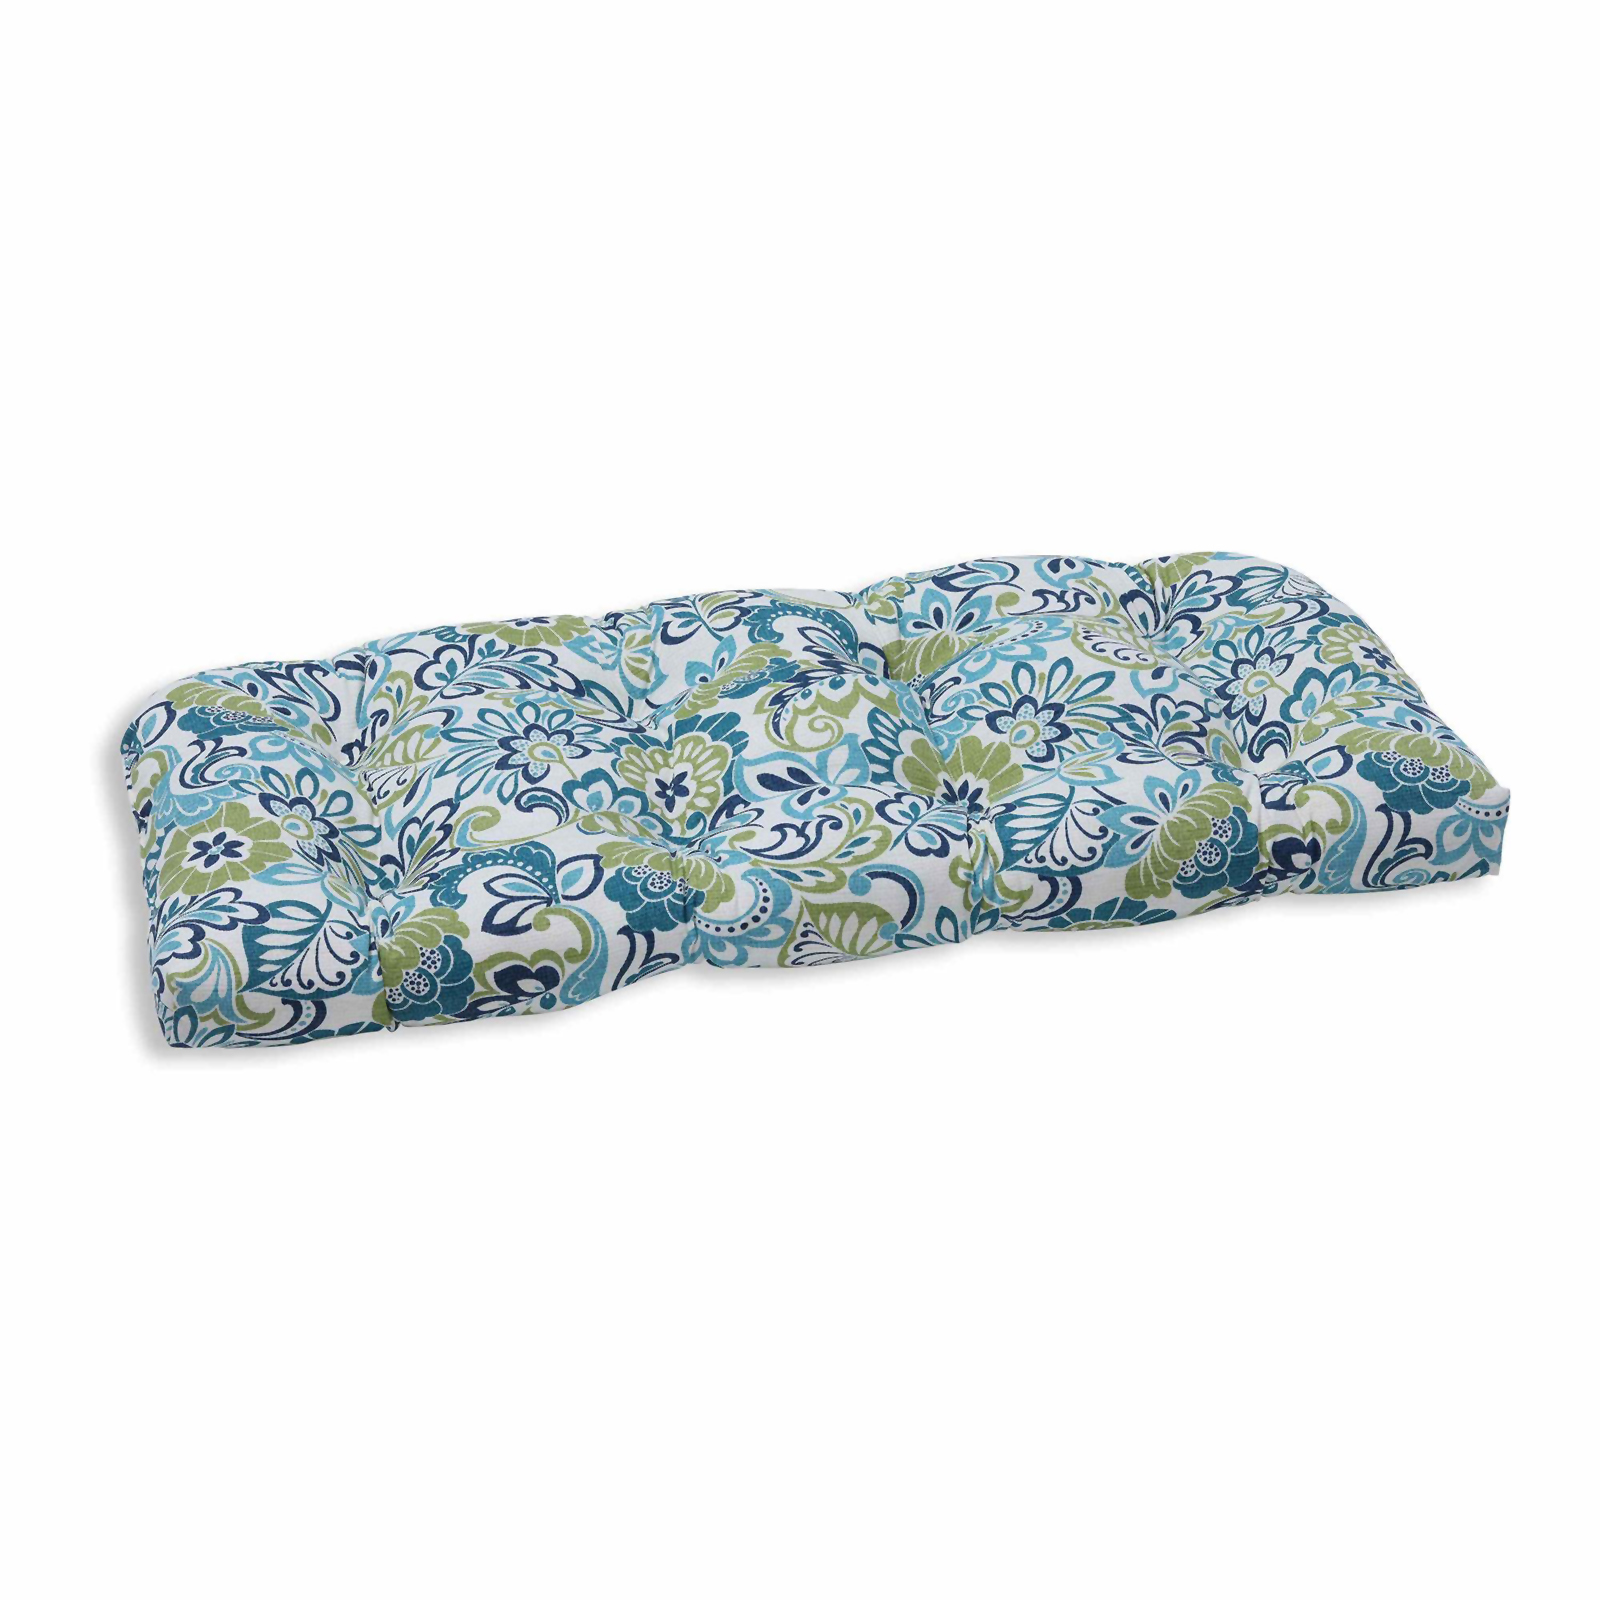 Pillow Perfect Zoe Millard Wicker Loveseat Cushion - Floral